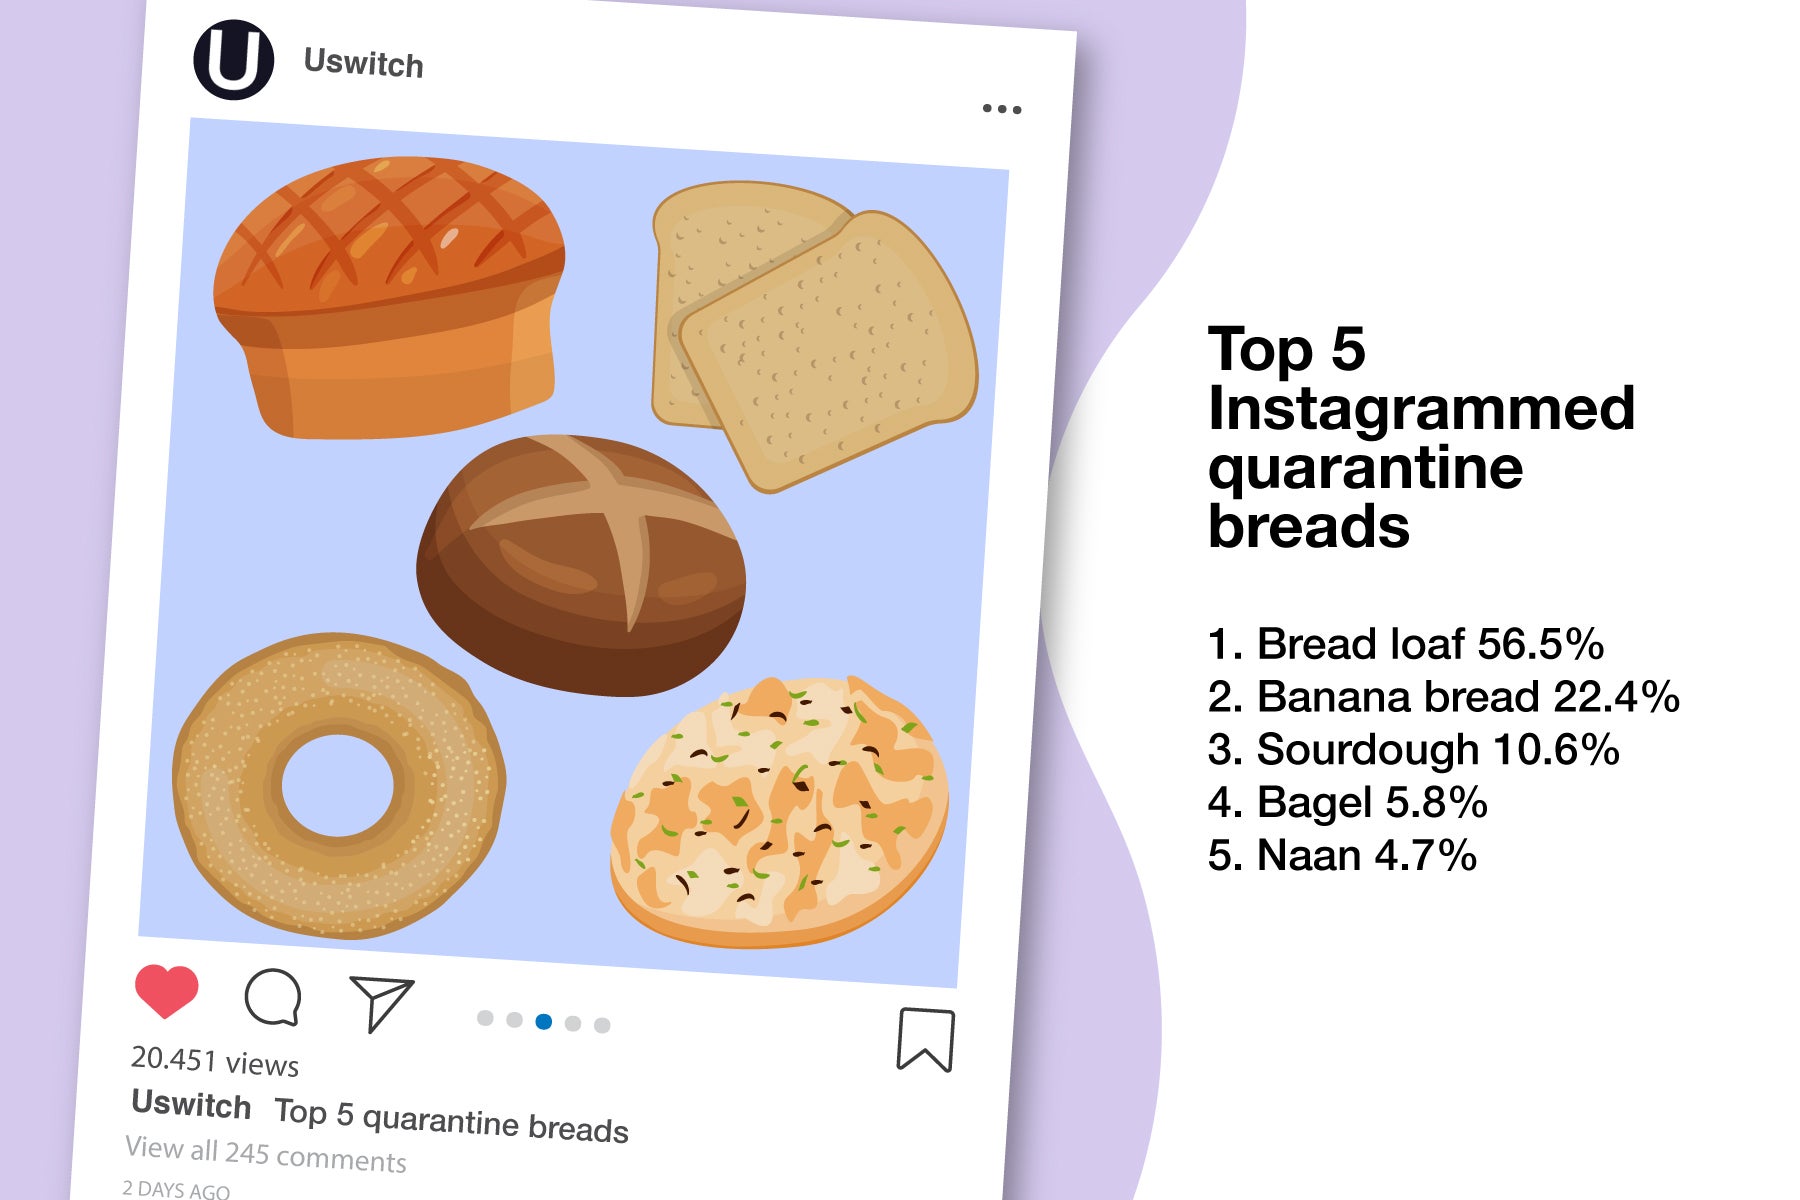 Instagrammed breads